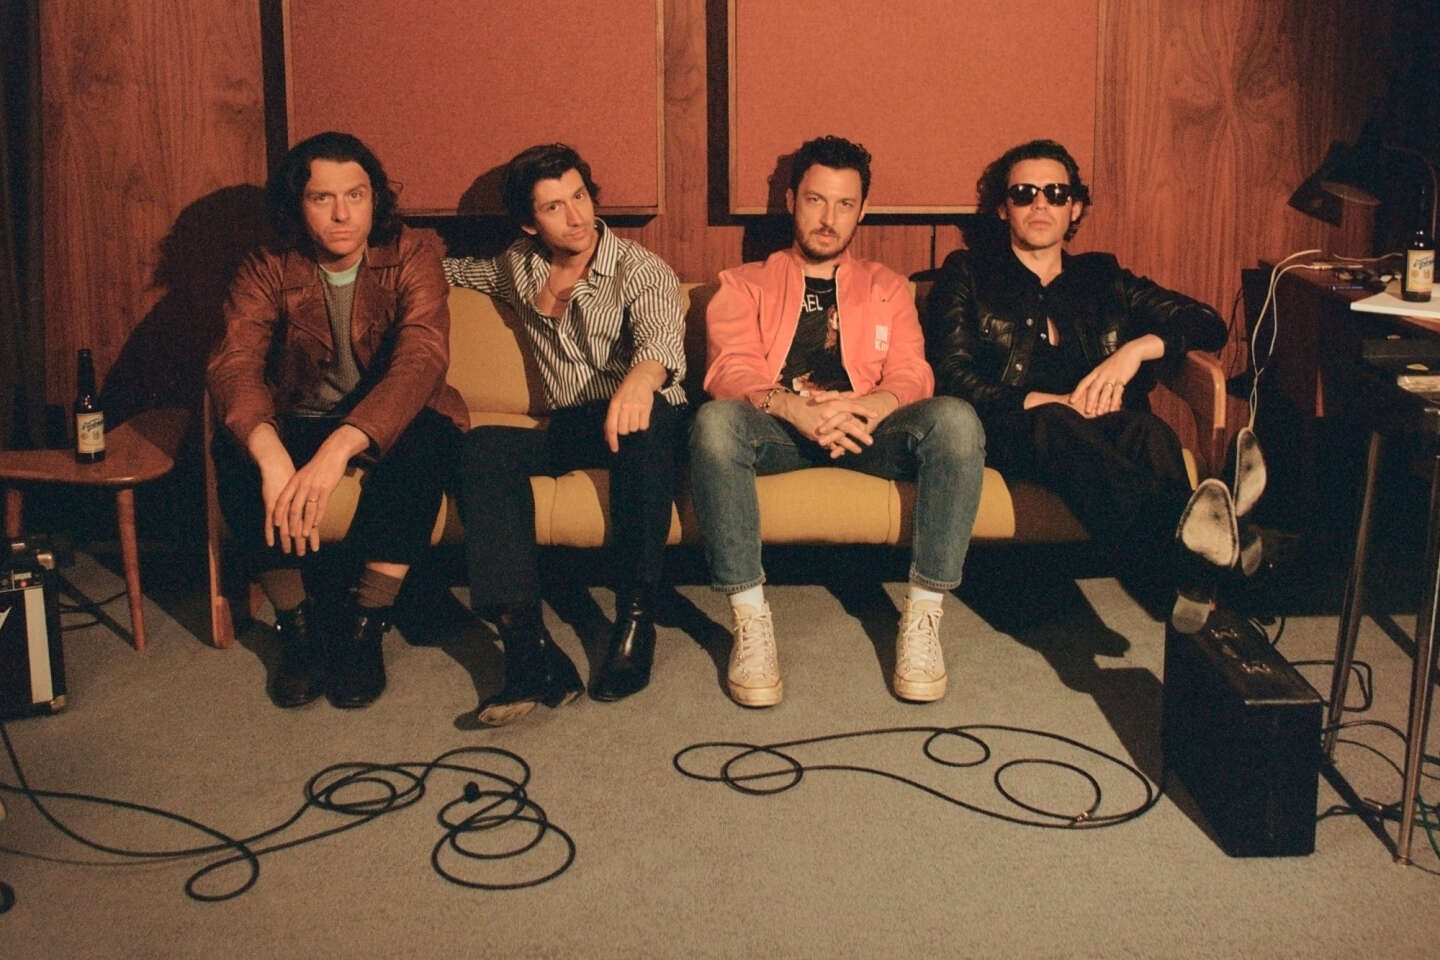 følelsesmæssig forlade tortur Arctic Monkeys push boundaries with their new LP "The Car"